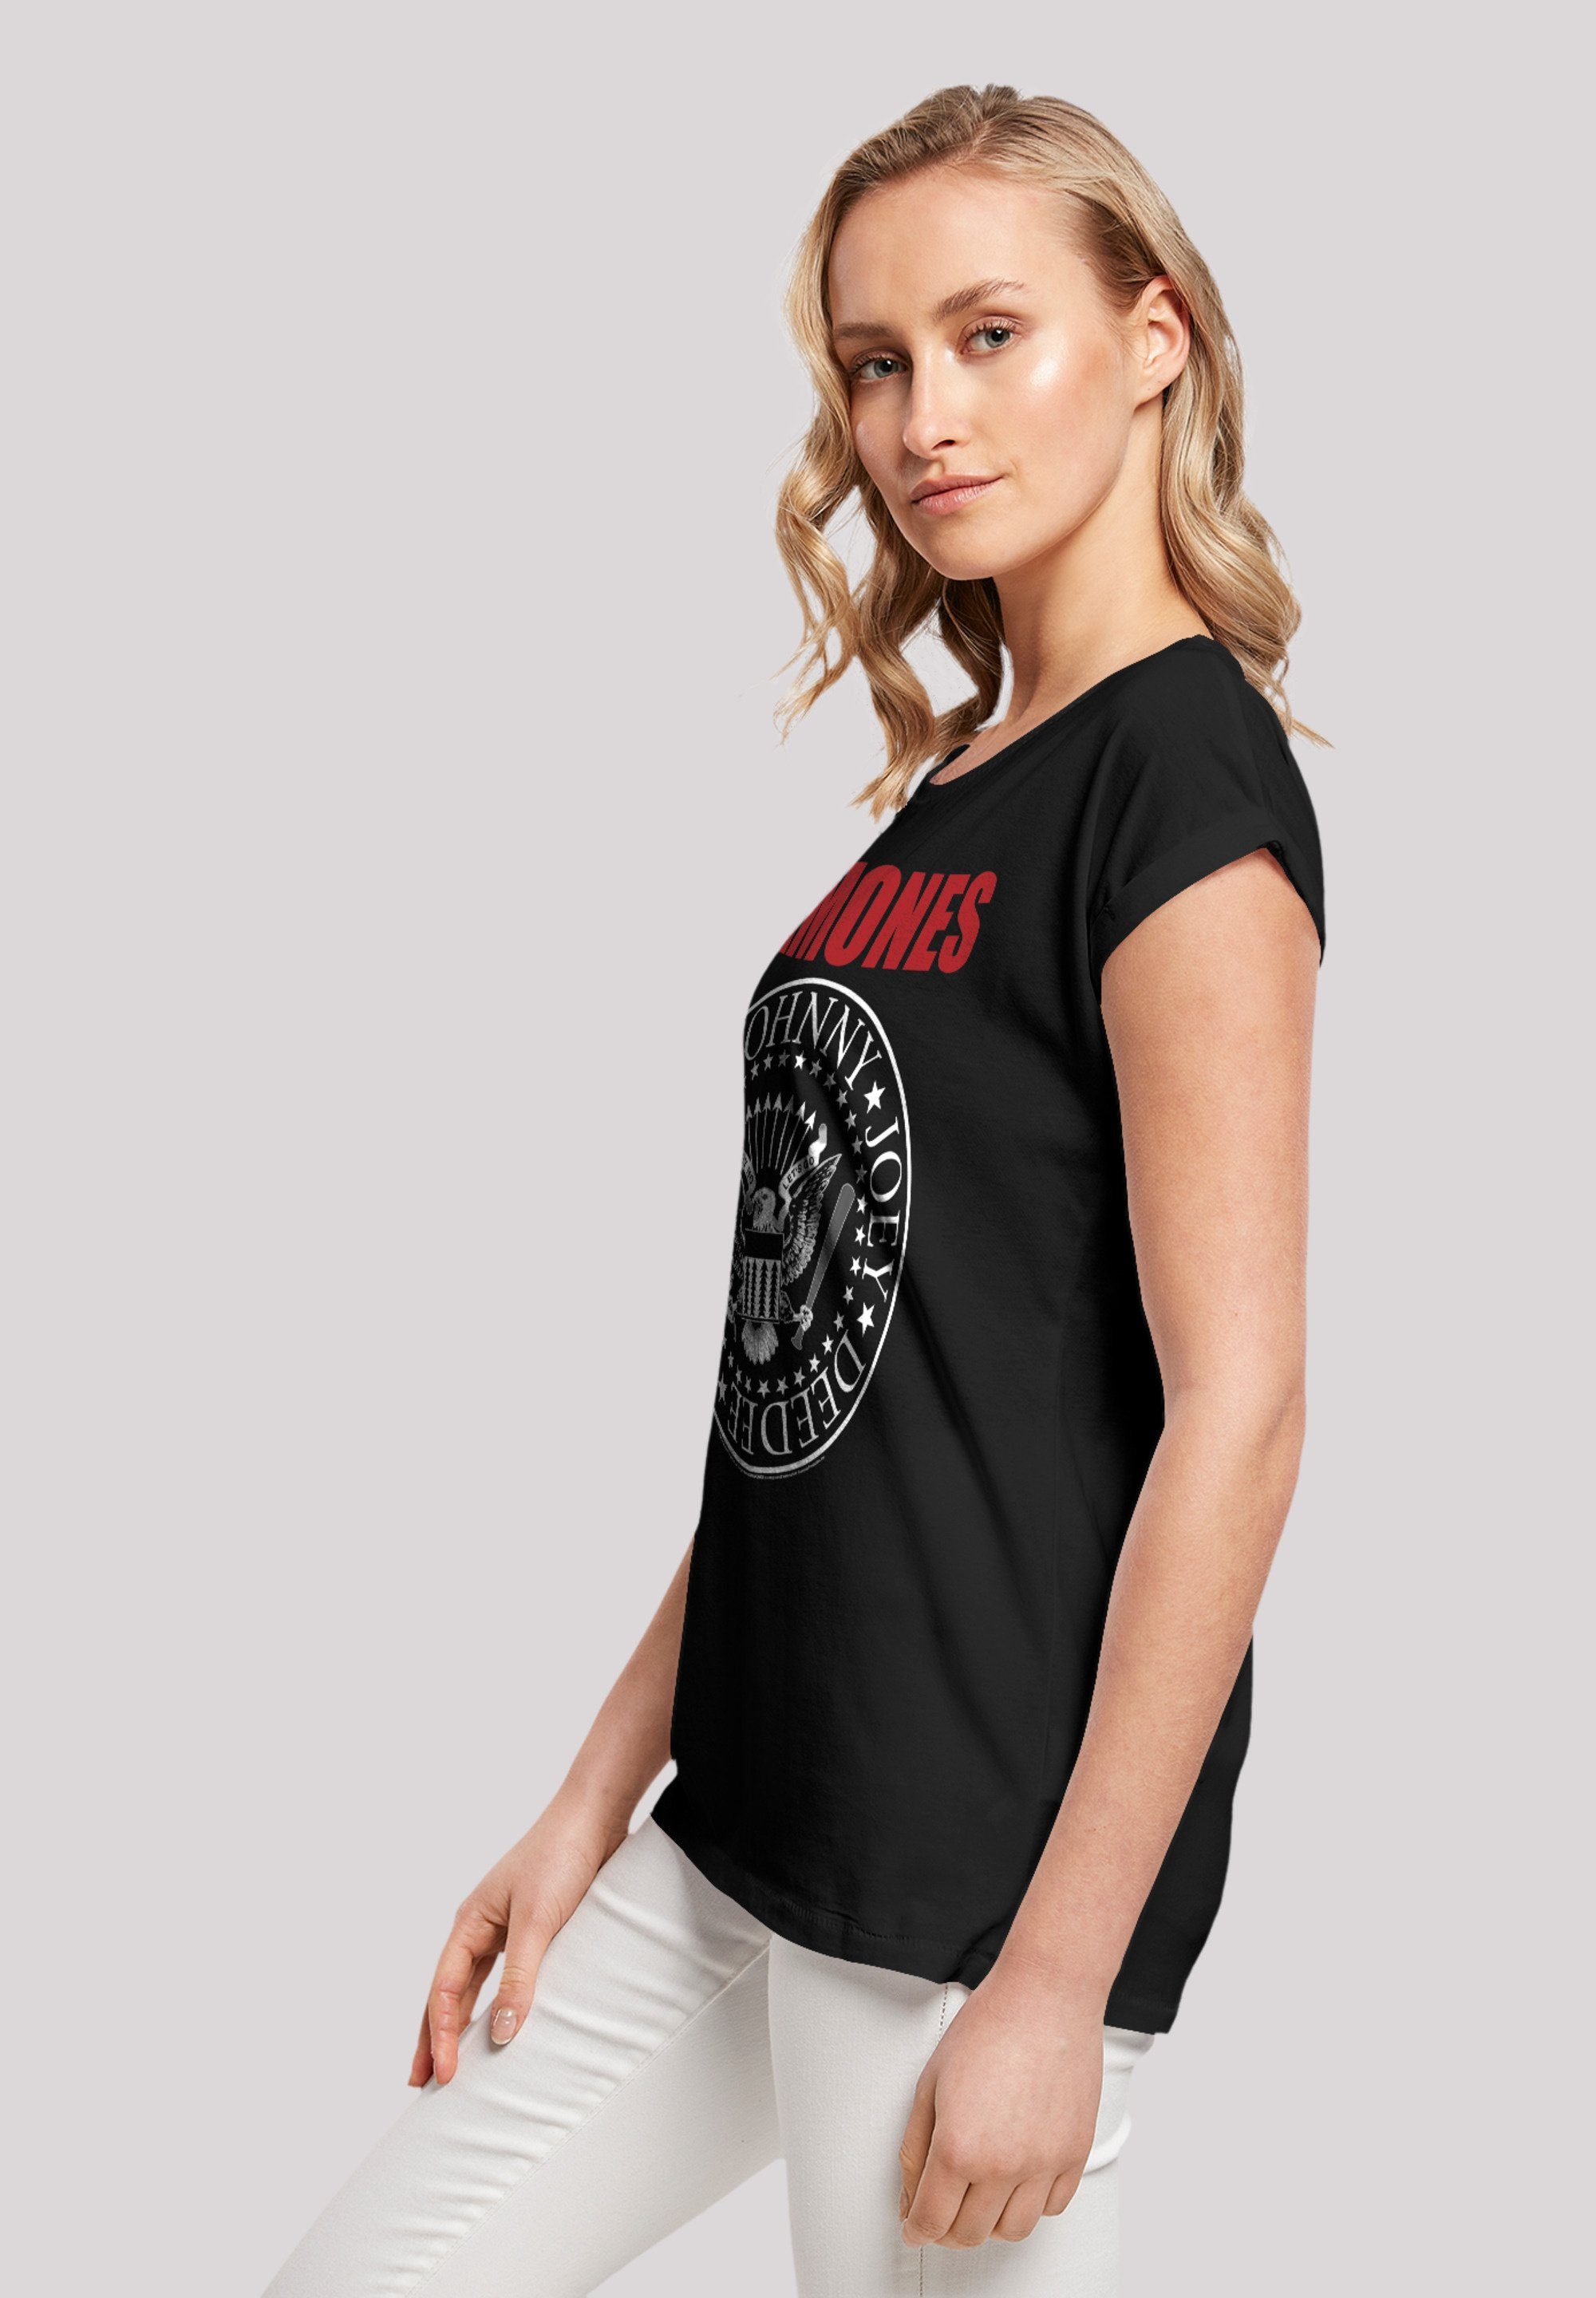 Text F4NT4STIC Seal Band, Musik Rock-Musik Red Rock Qualität, Ramones Premium Band T-Shirt